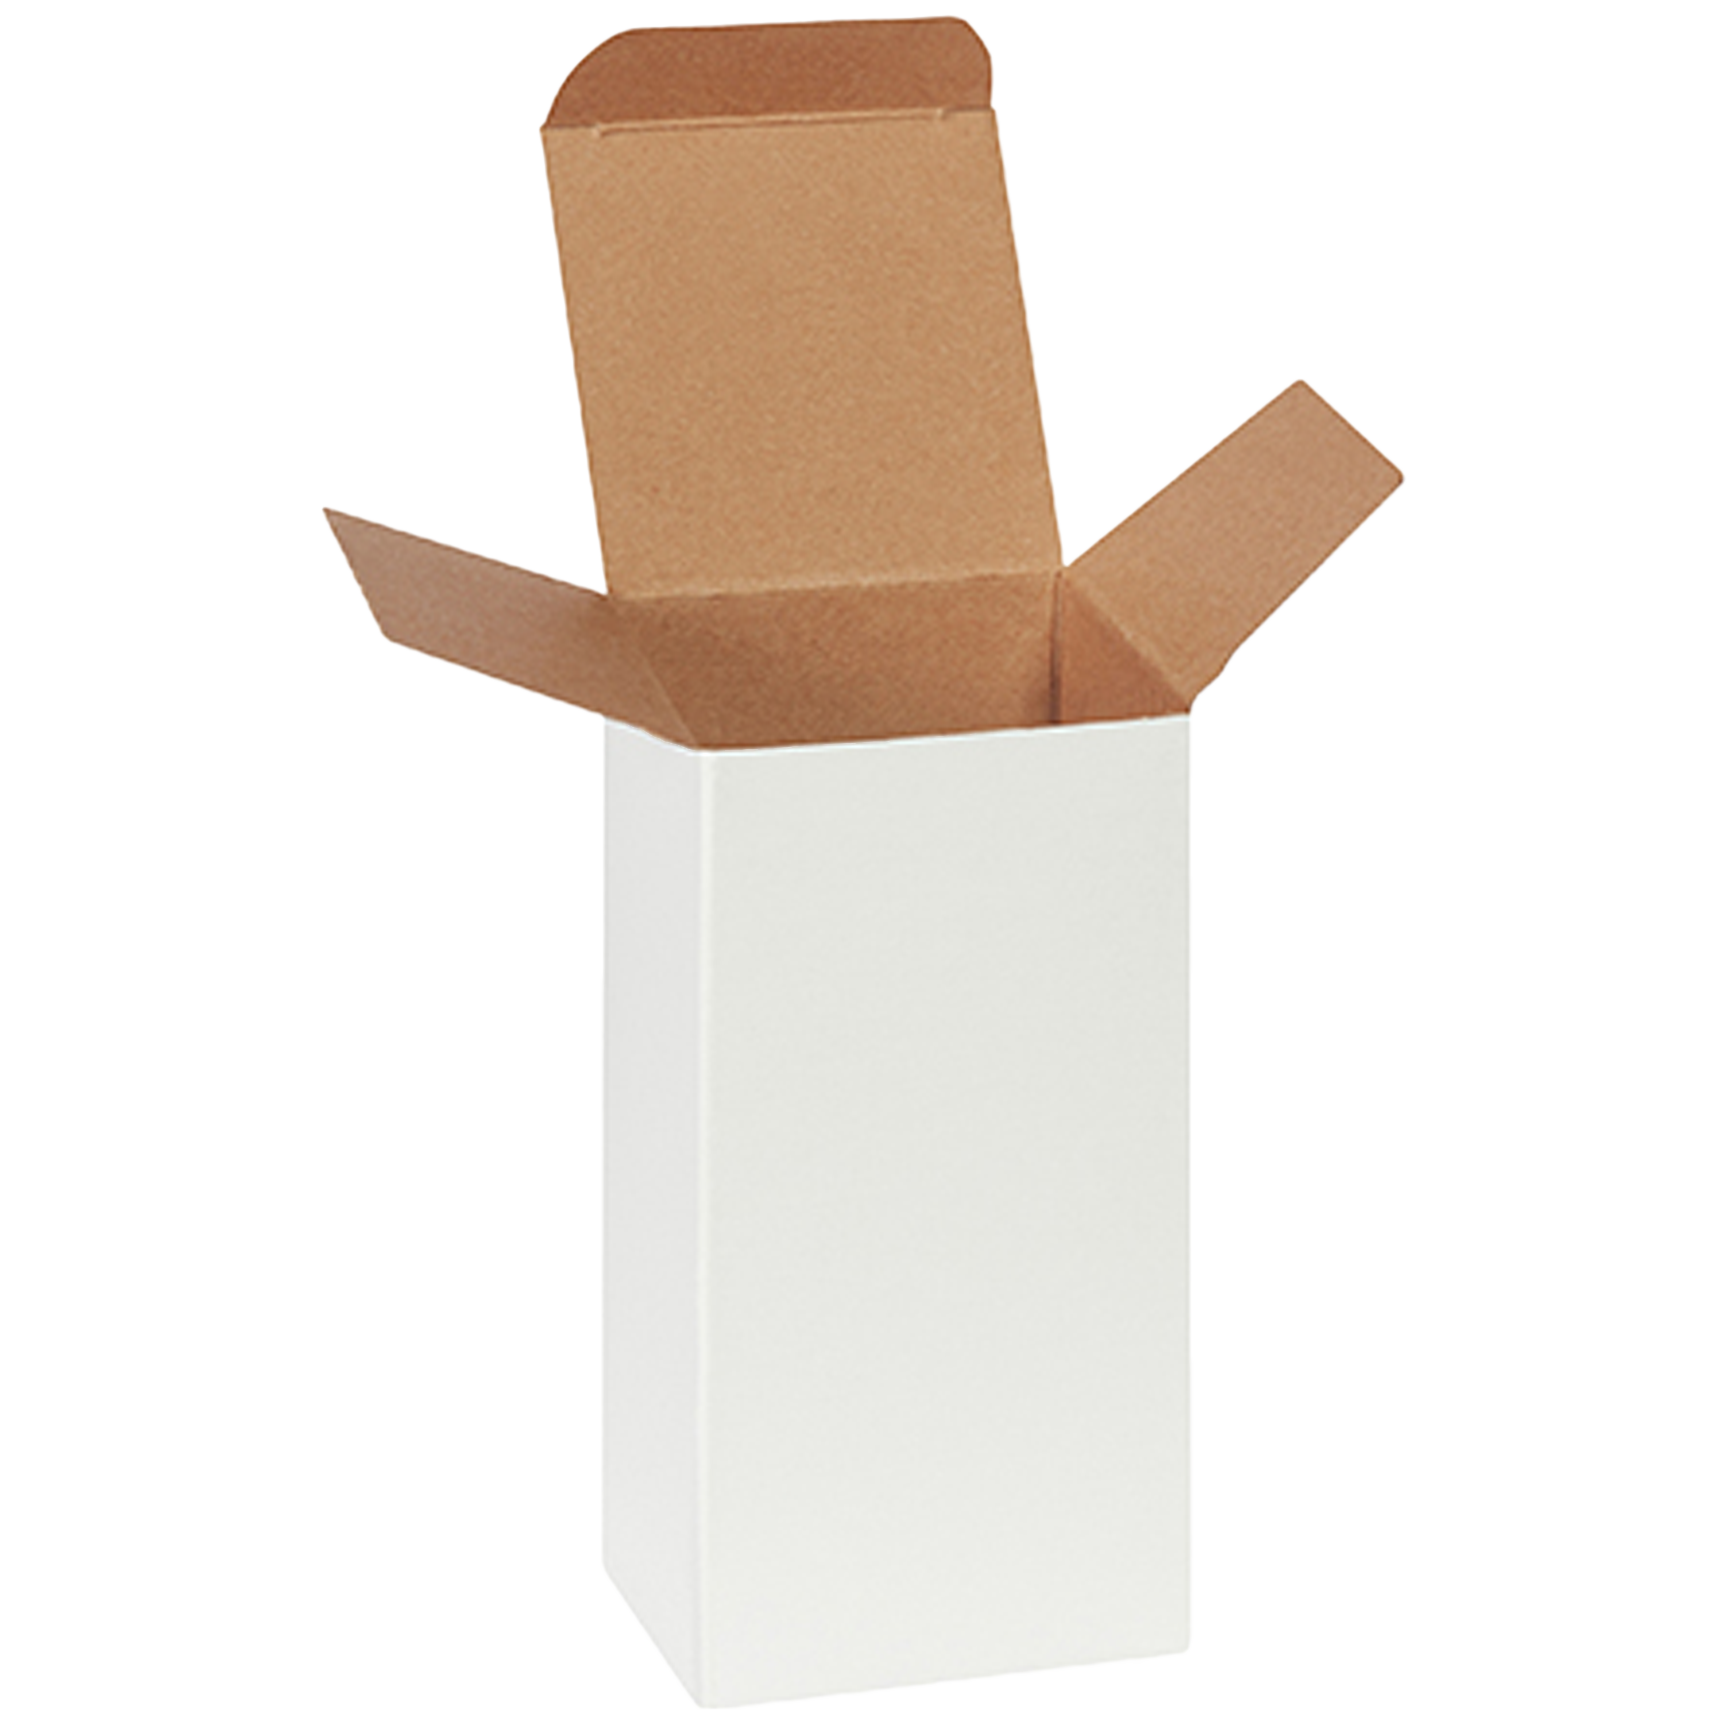 3 x 3 x 6 White Reverse Tuck Folding Carton (250/case)